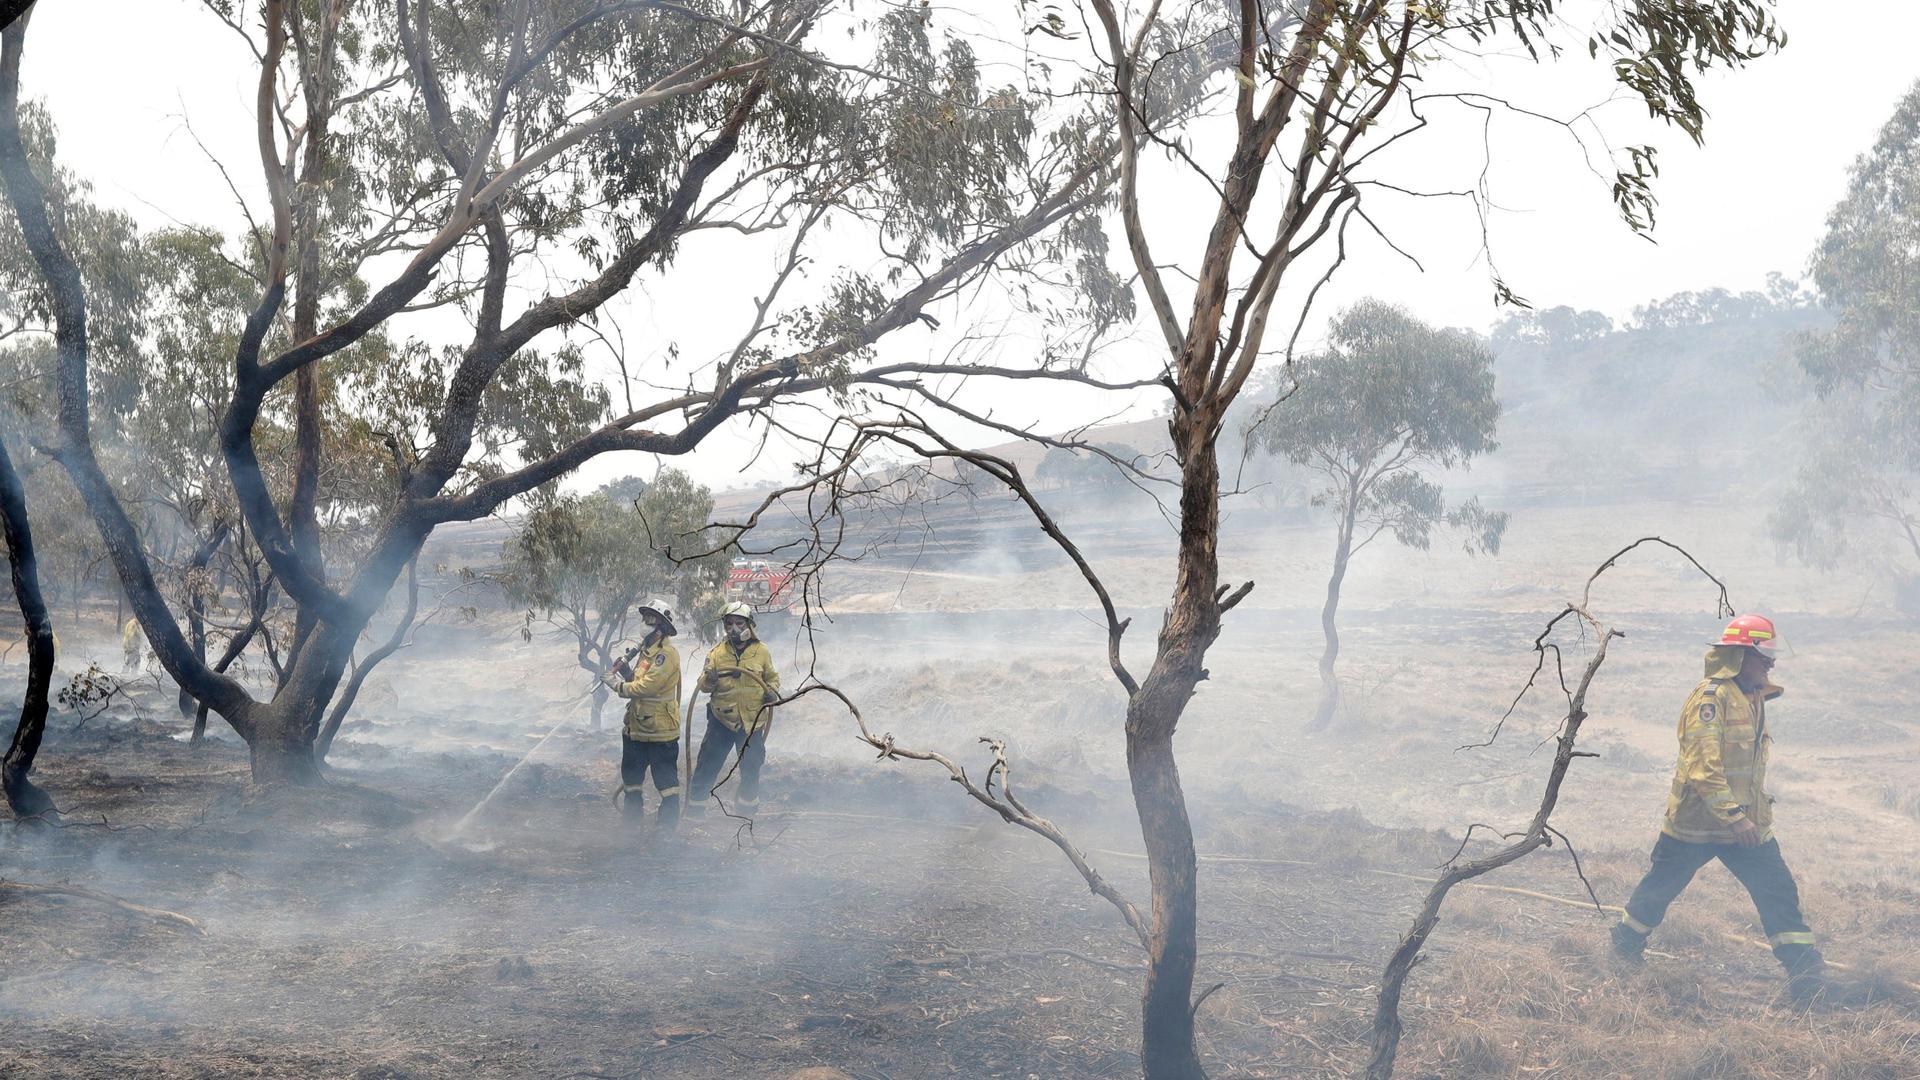 Firefighters control a spot fire near Bredbo, south of the Australian capital, Canberra, Feb. 2, 2020. 